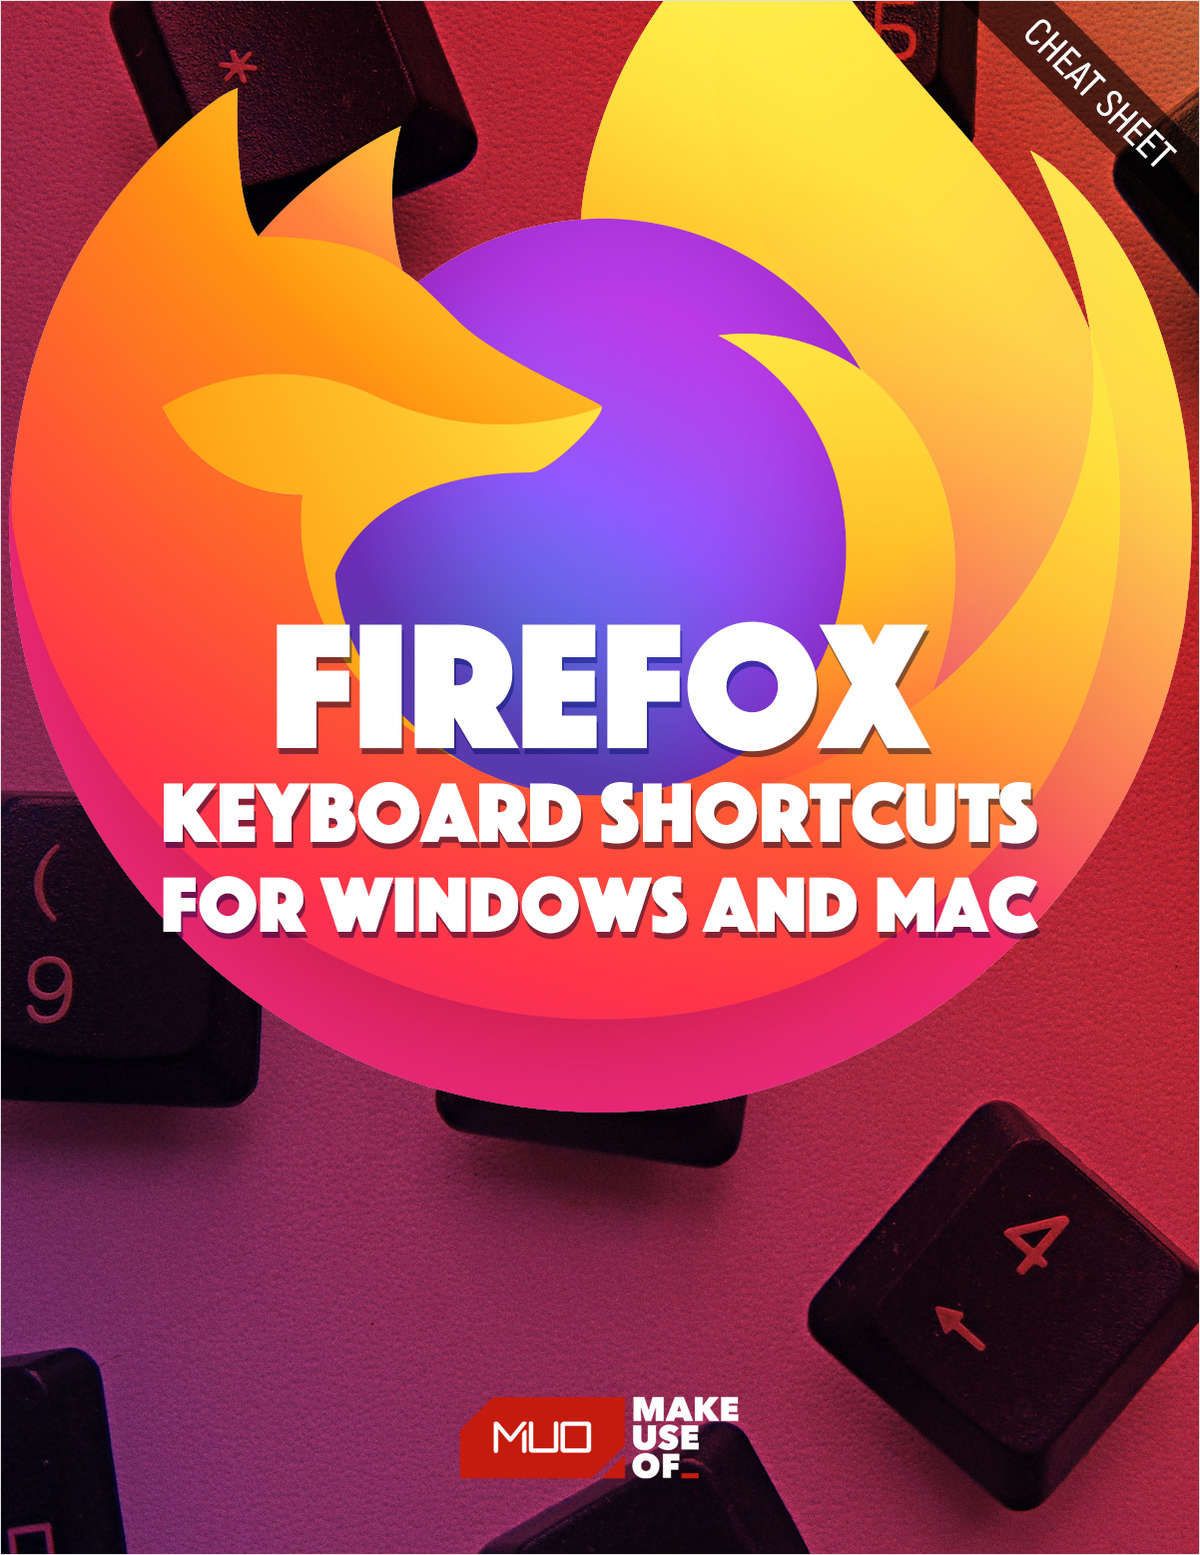 Firefox Keyboard Shortcuts for Windows and Mac (Free Cheat Sheet)